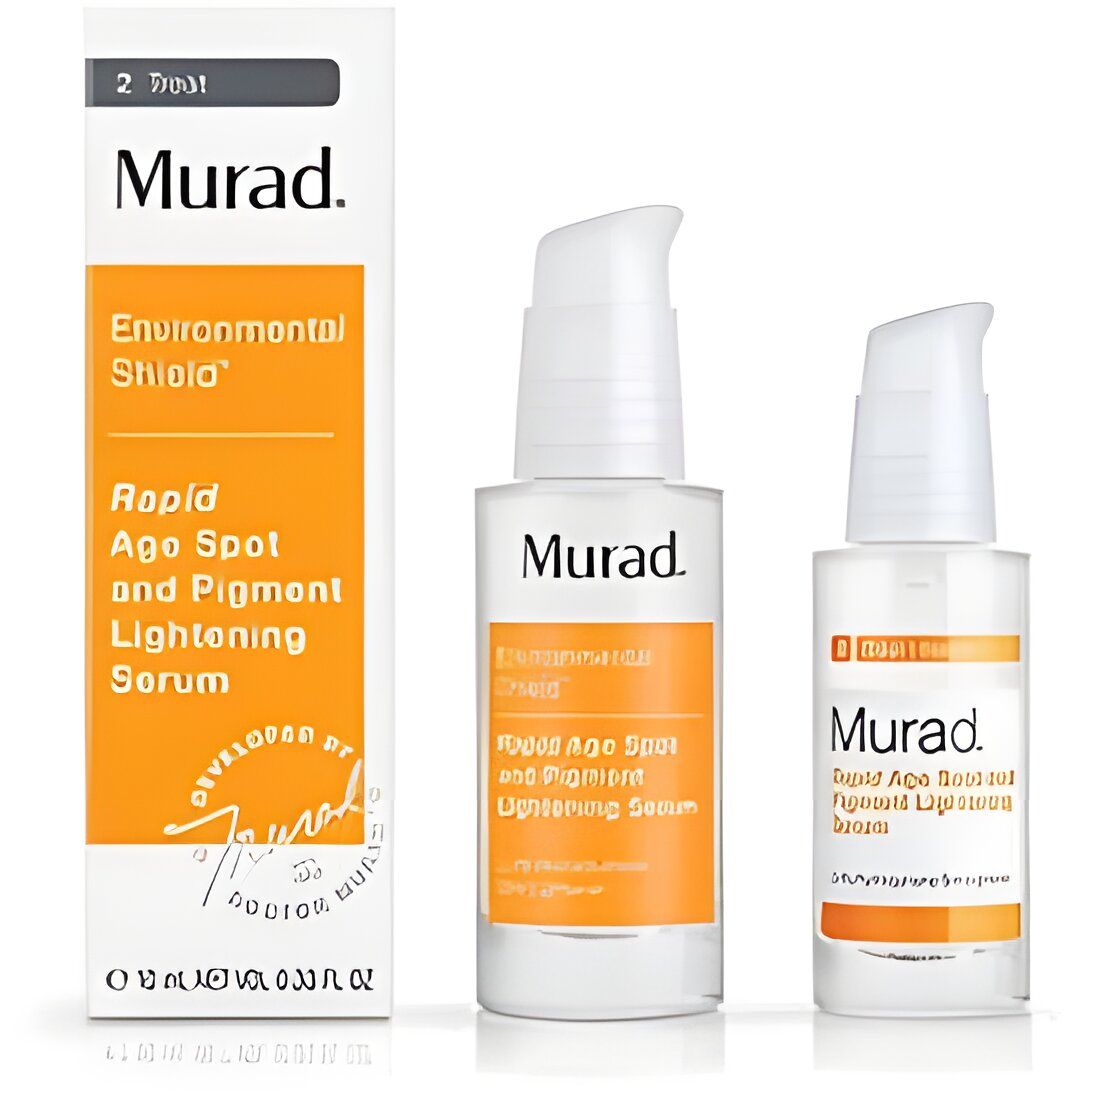 Free Murad Rapid Age Spot and Pigment Lightening Serum